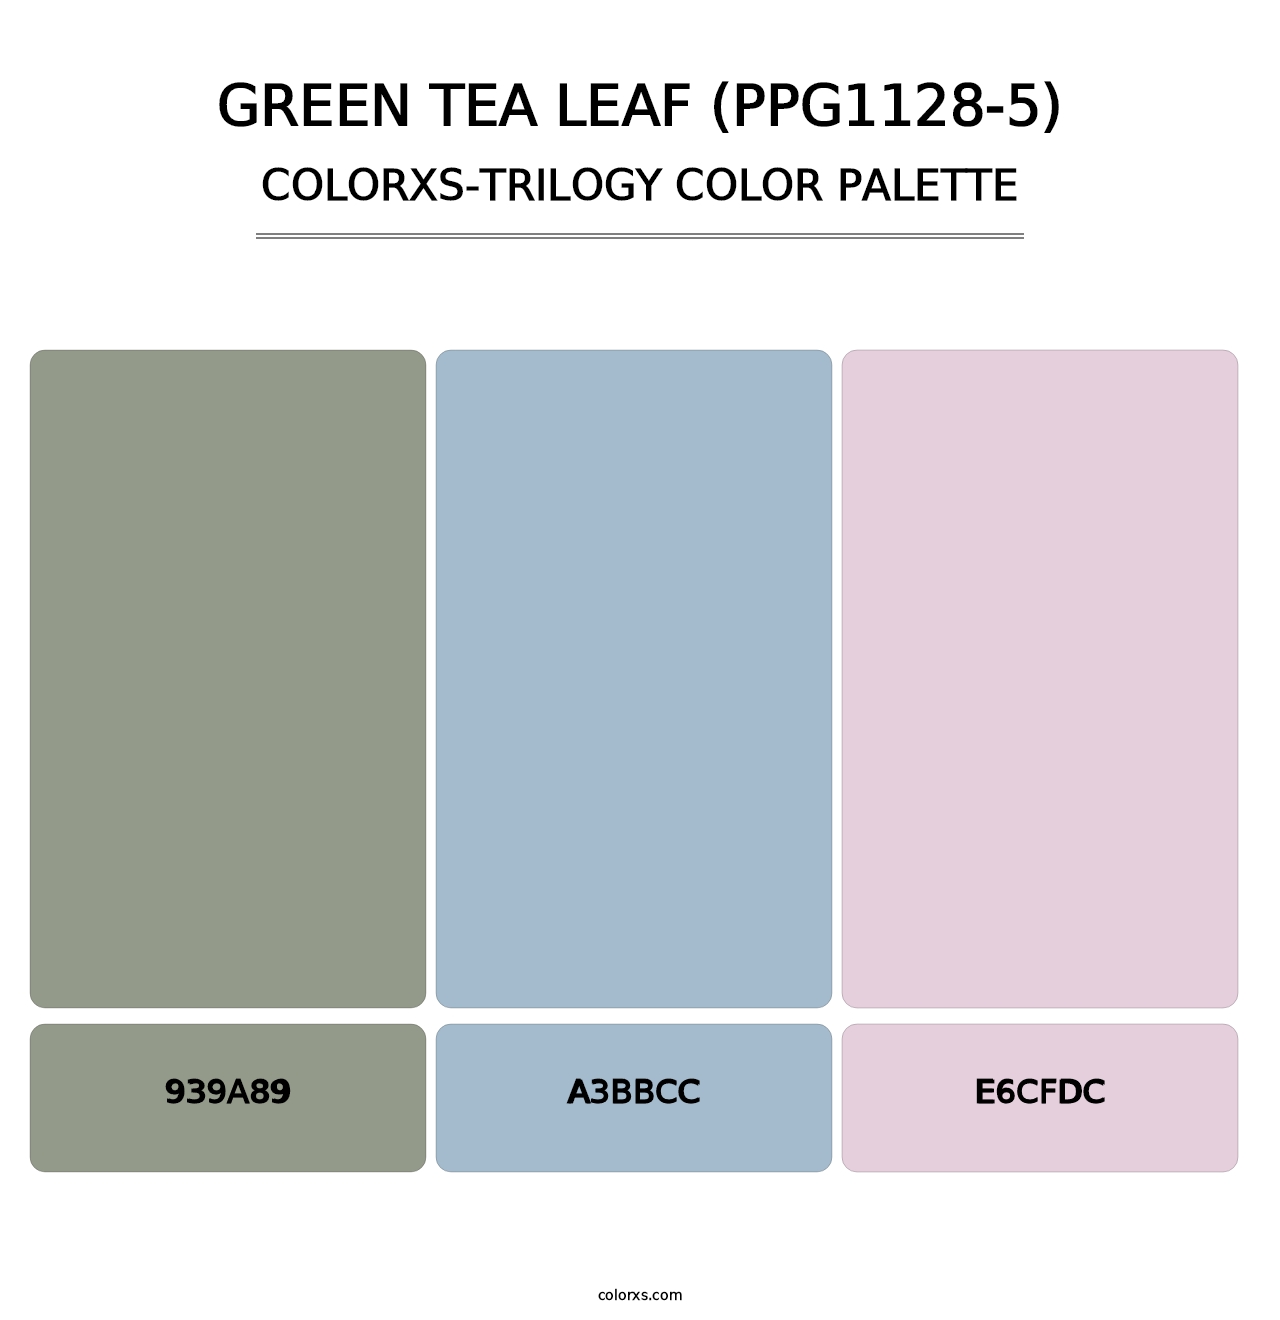 Green Tea Leaf (PPG1128-5) - Colorxs Trilogy Palette